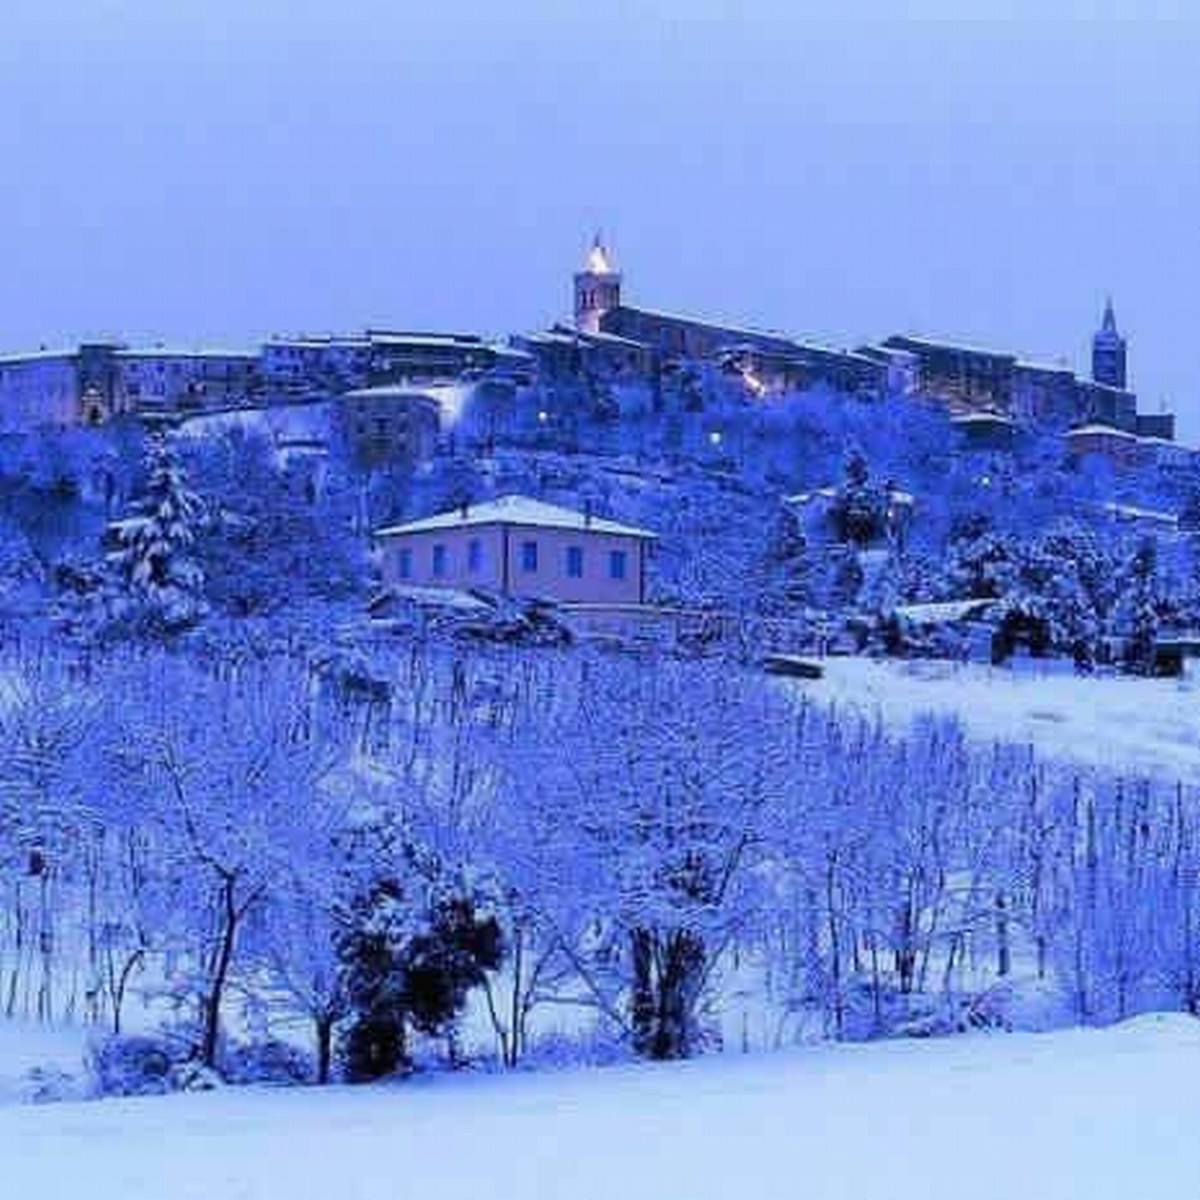 Umbria Burian Maltempo Terni Orvieto Perugia neve - 26 febbraio 2018 (9)